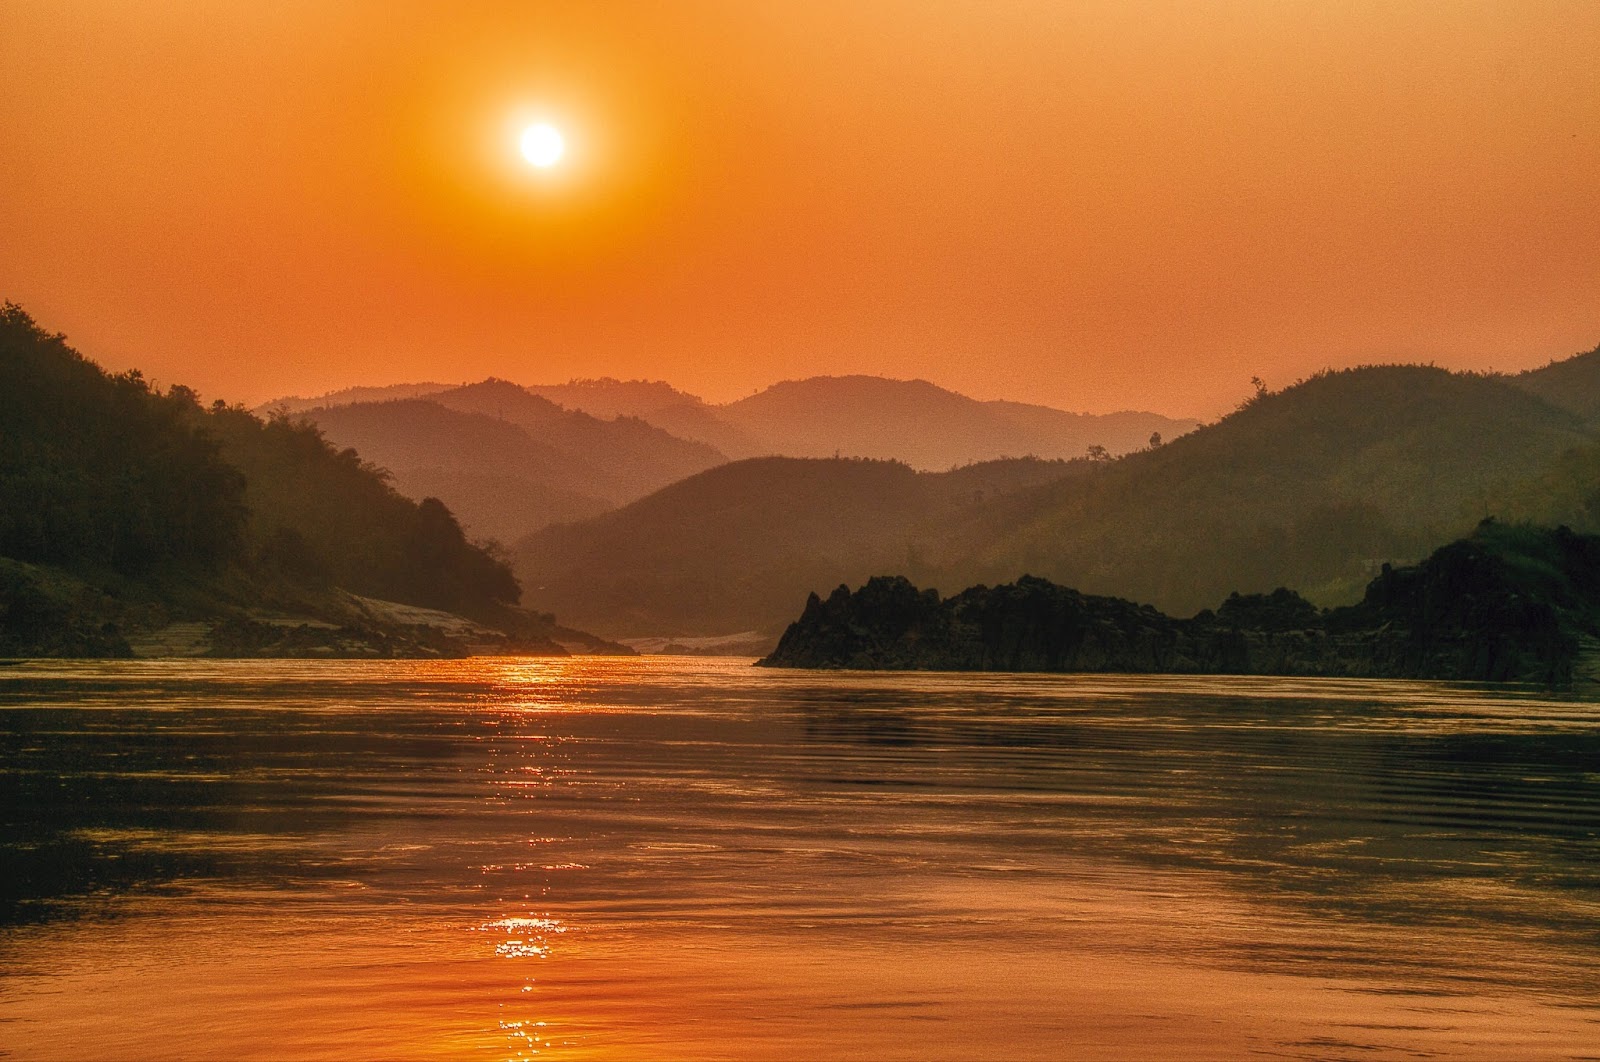 A stunning sunset over the Mekong River. 